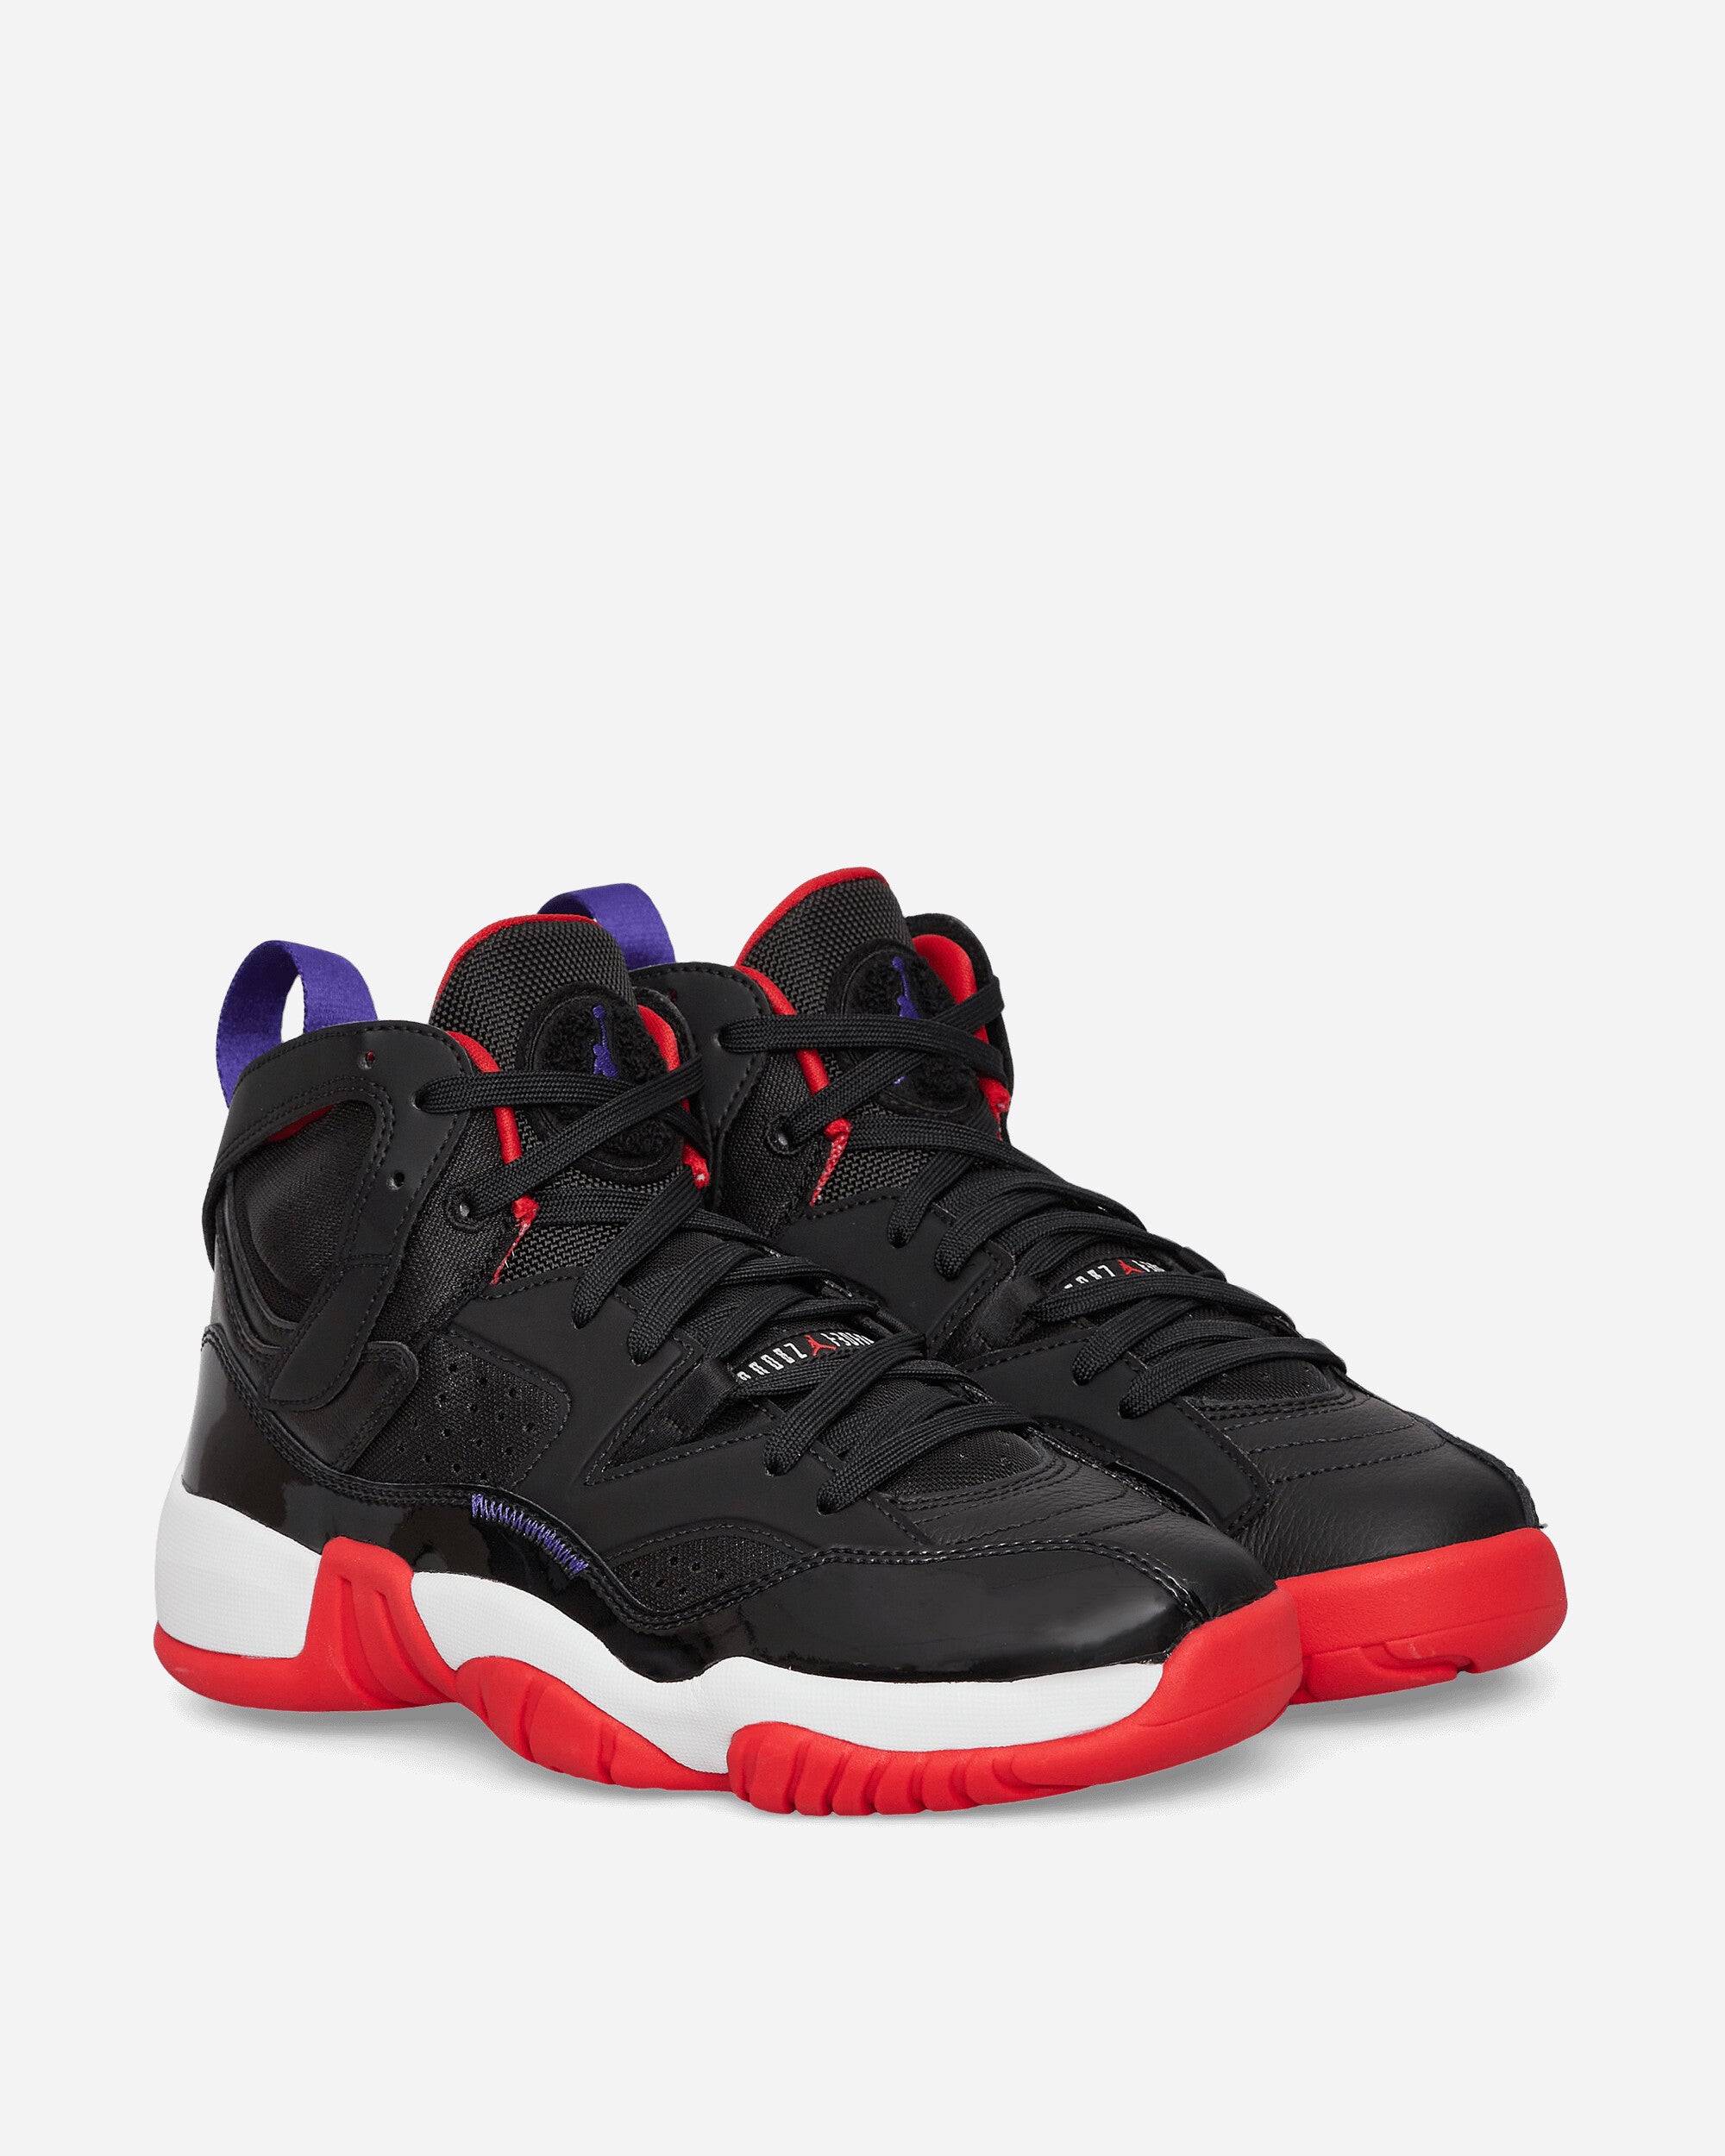 WMNS Jumpman Two Trey Sneakers Black / True Red